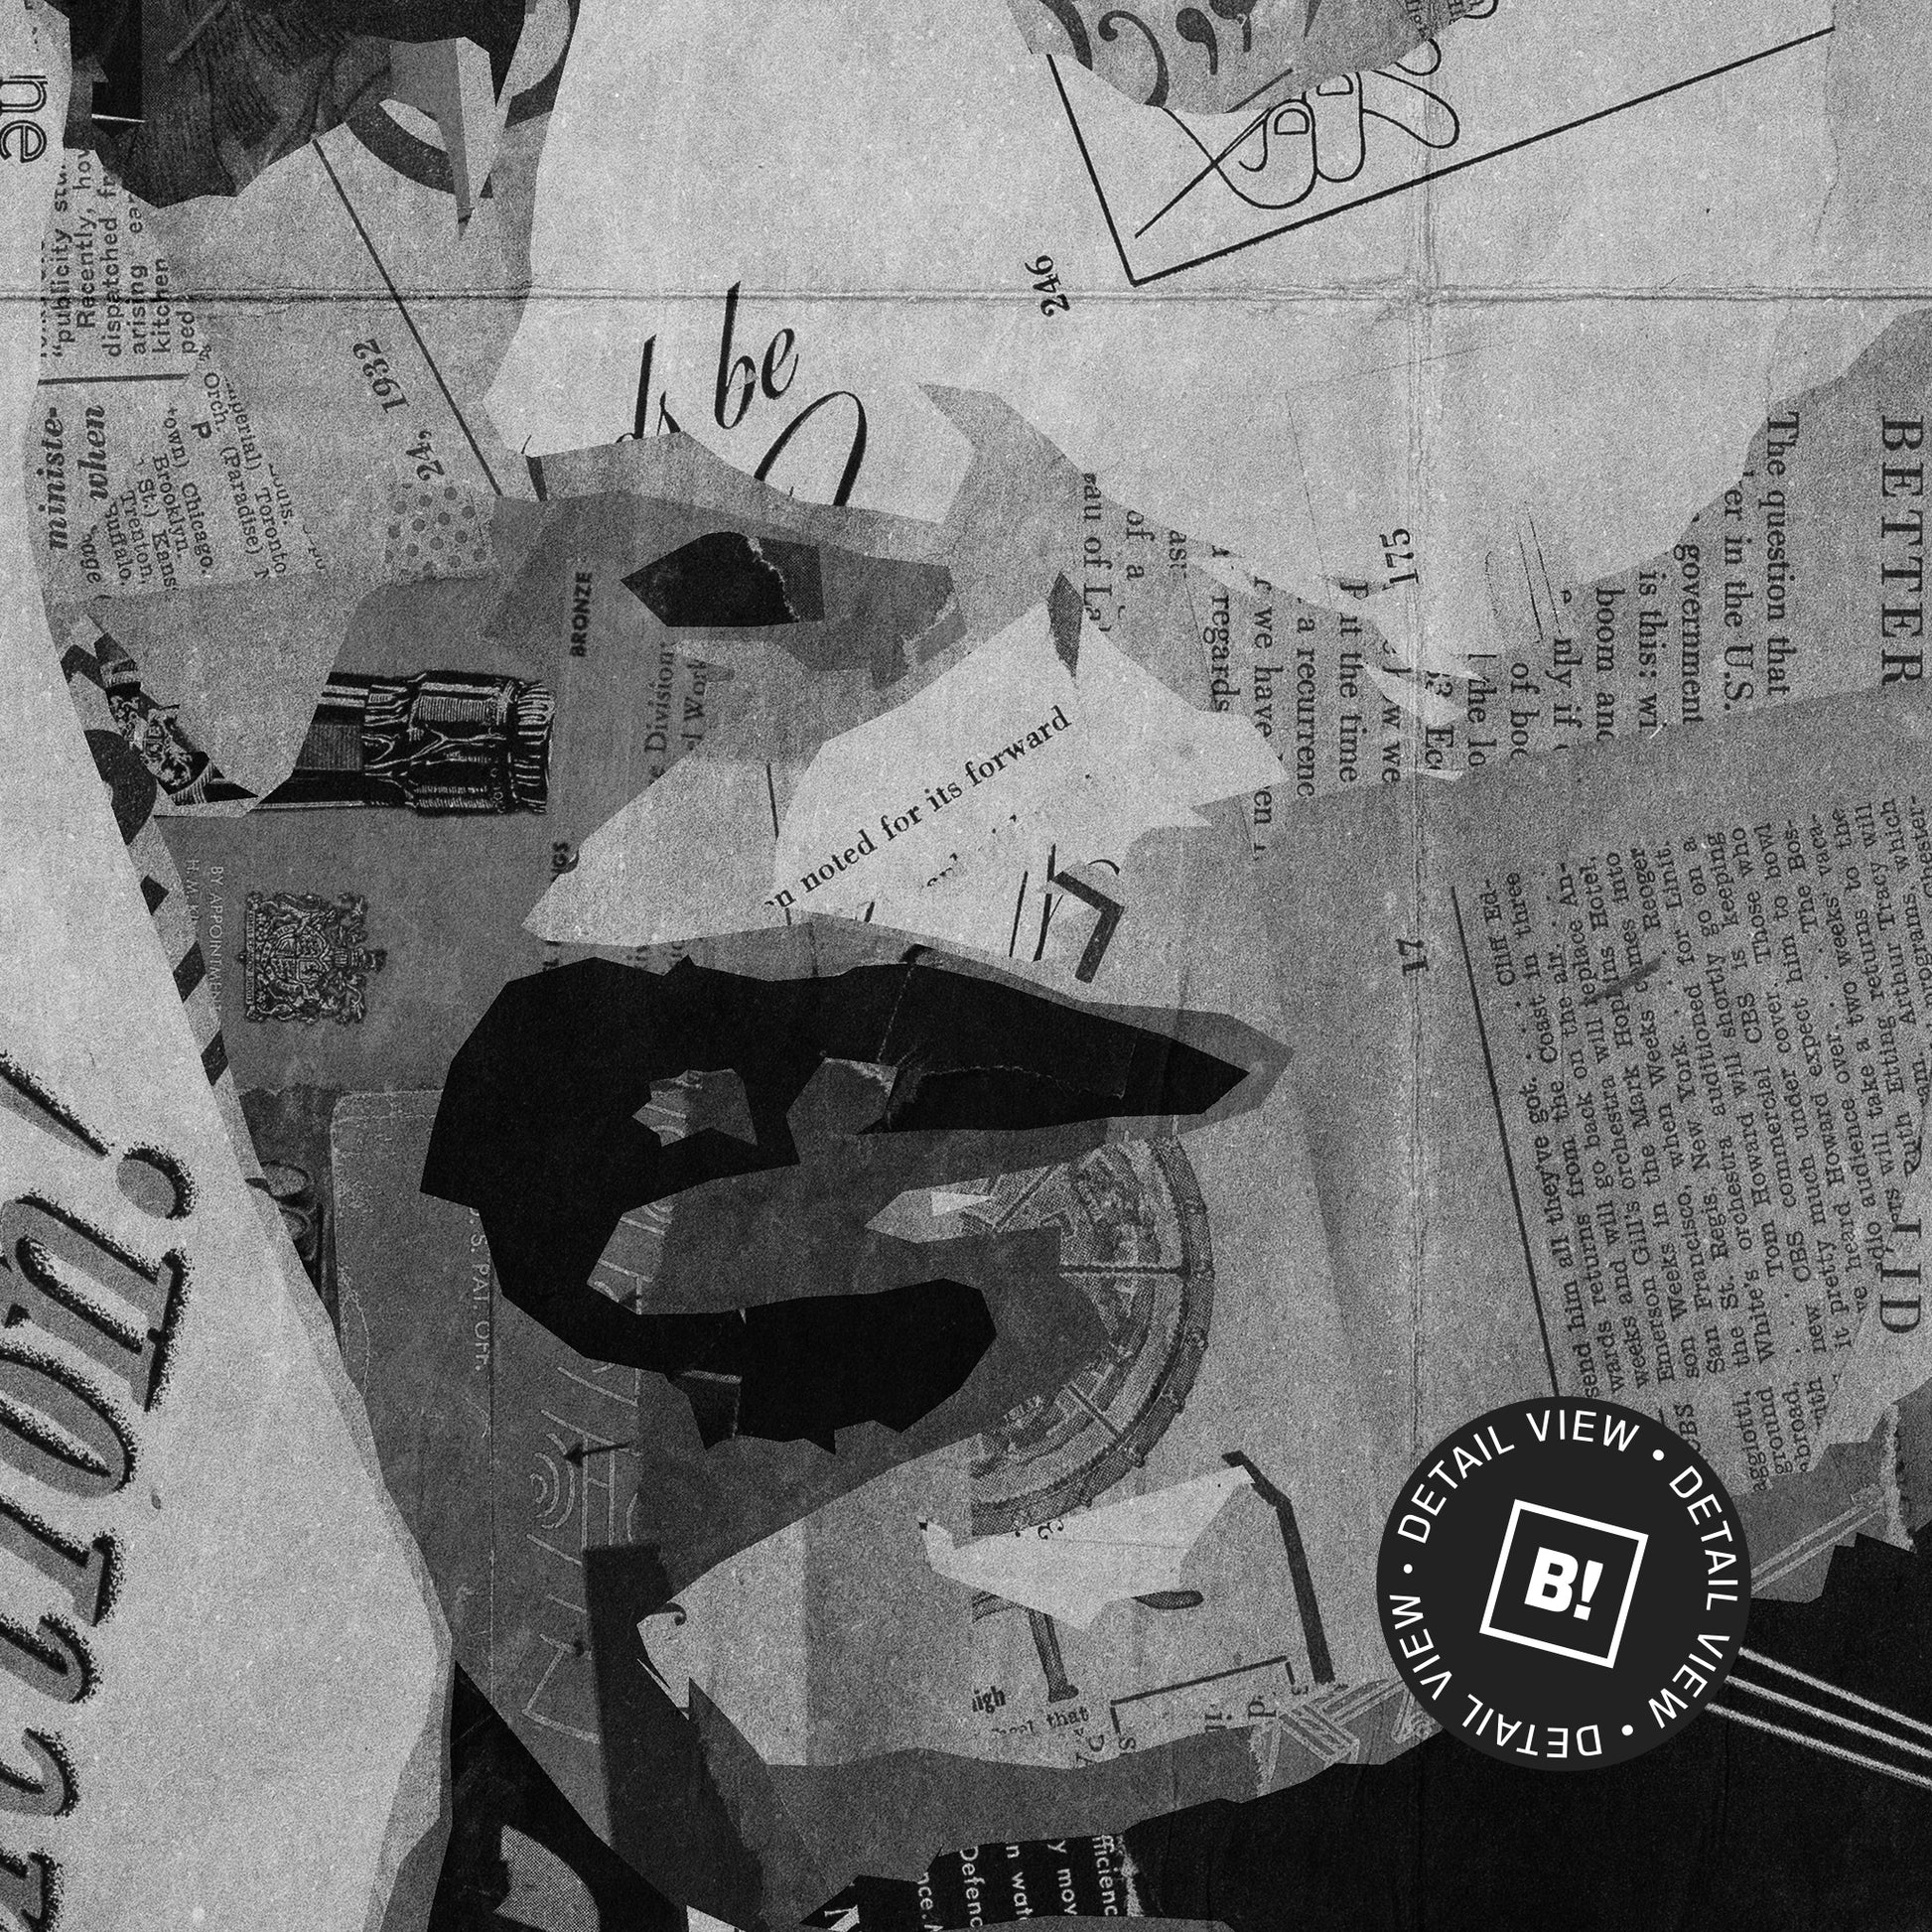 A Detail view of Binspired's Iconic Grace Kelly Paris Centre Pompidou Exhibition Art Print.